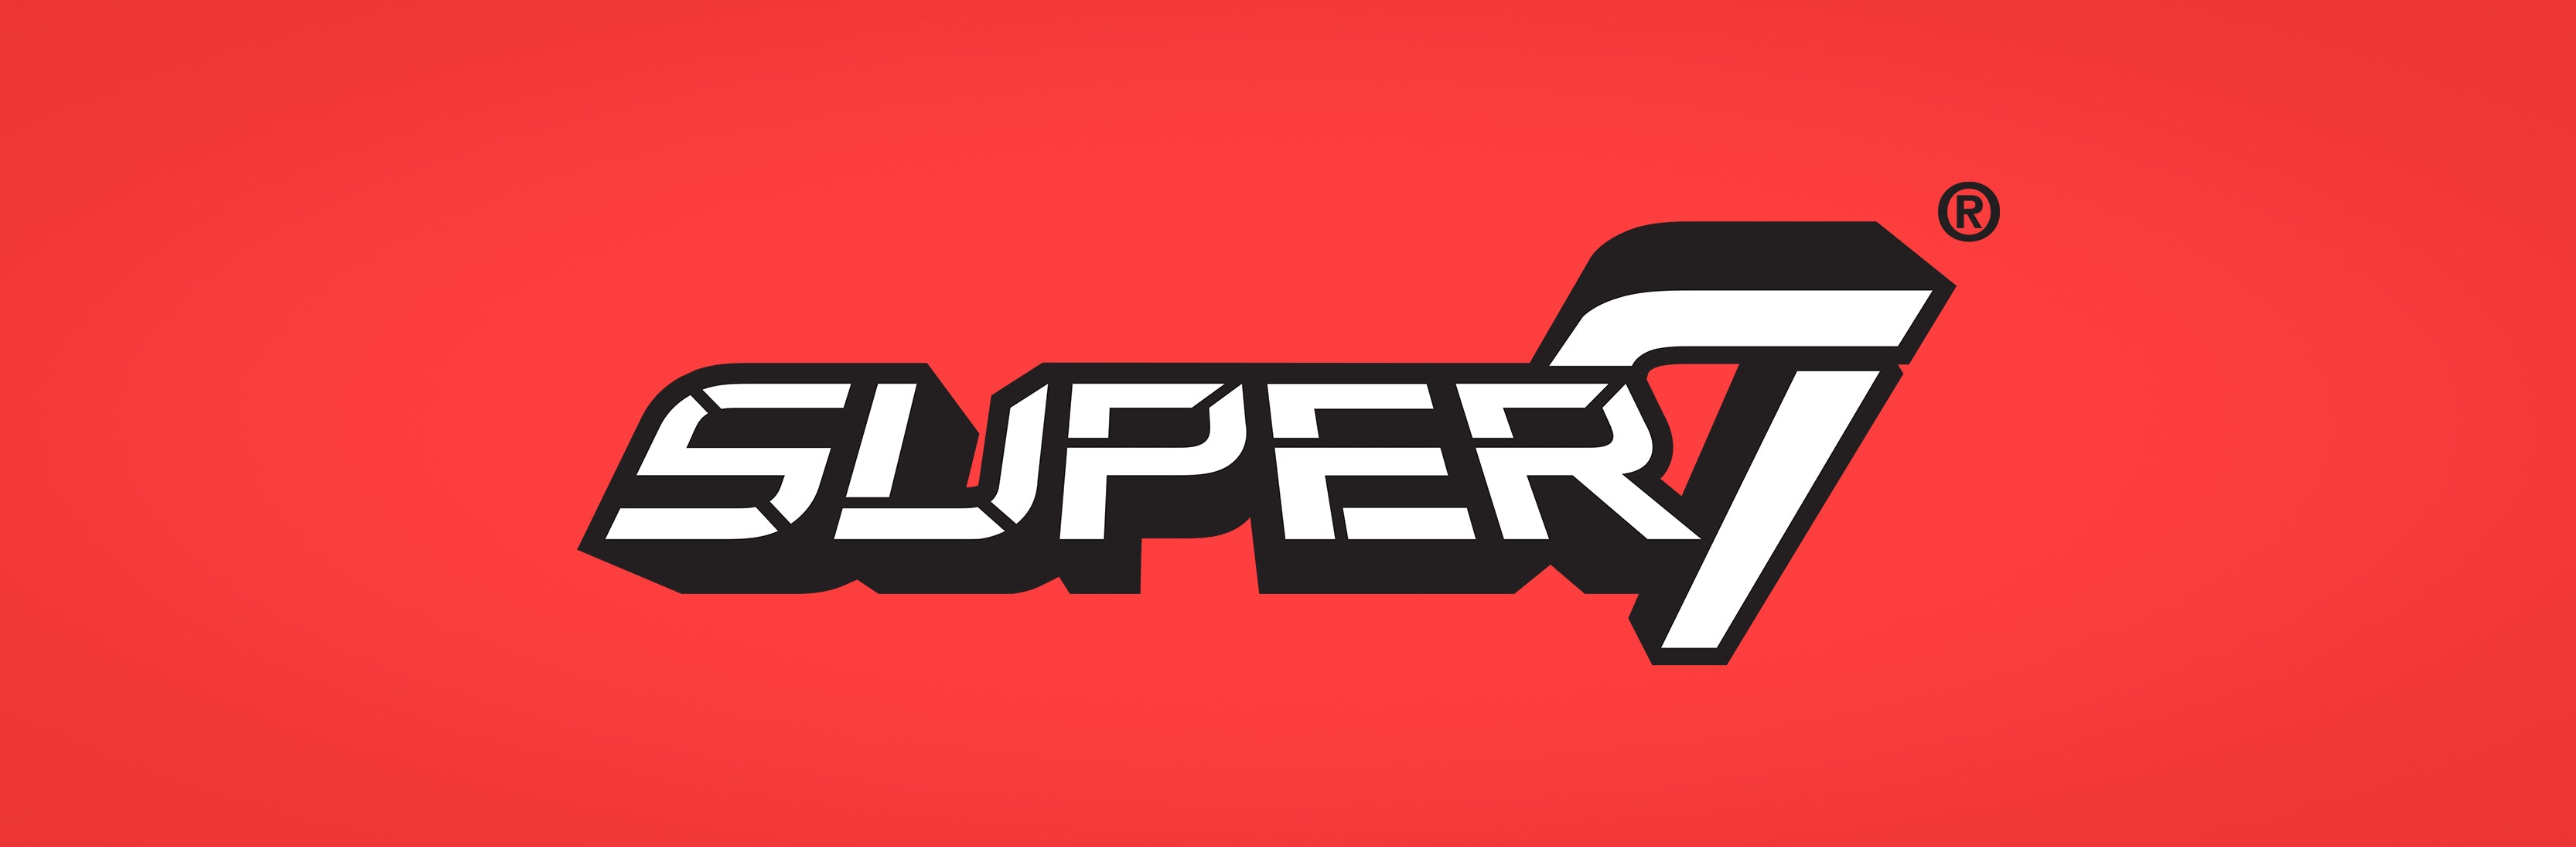 Brands > Super7